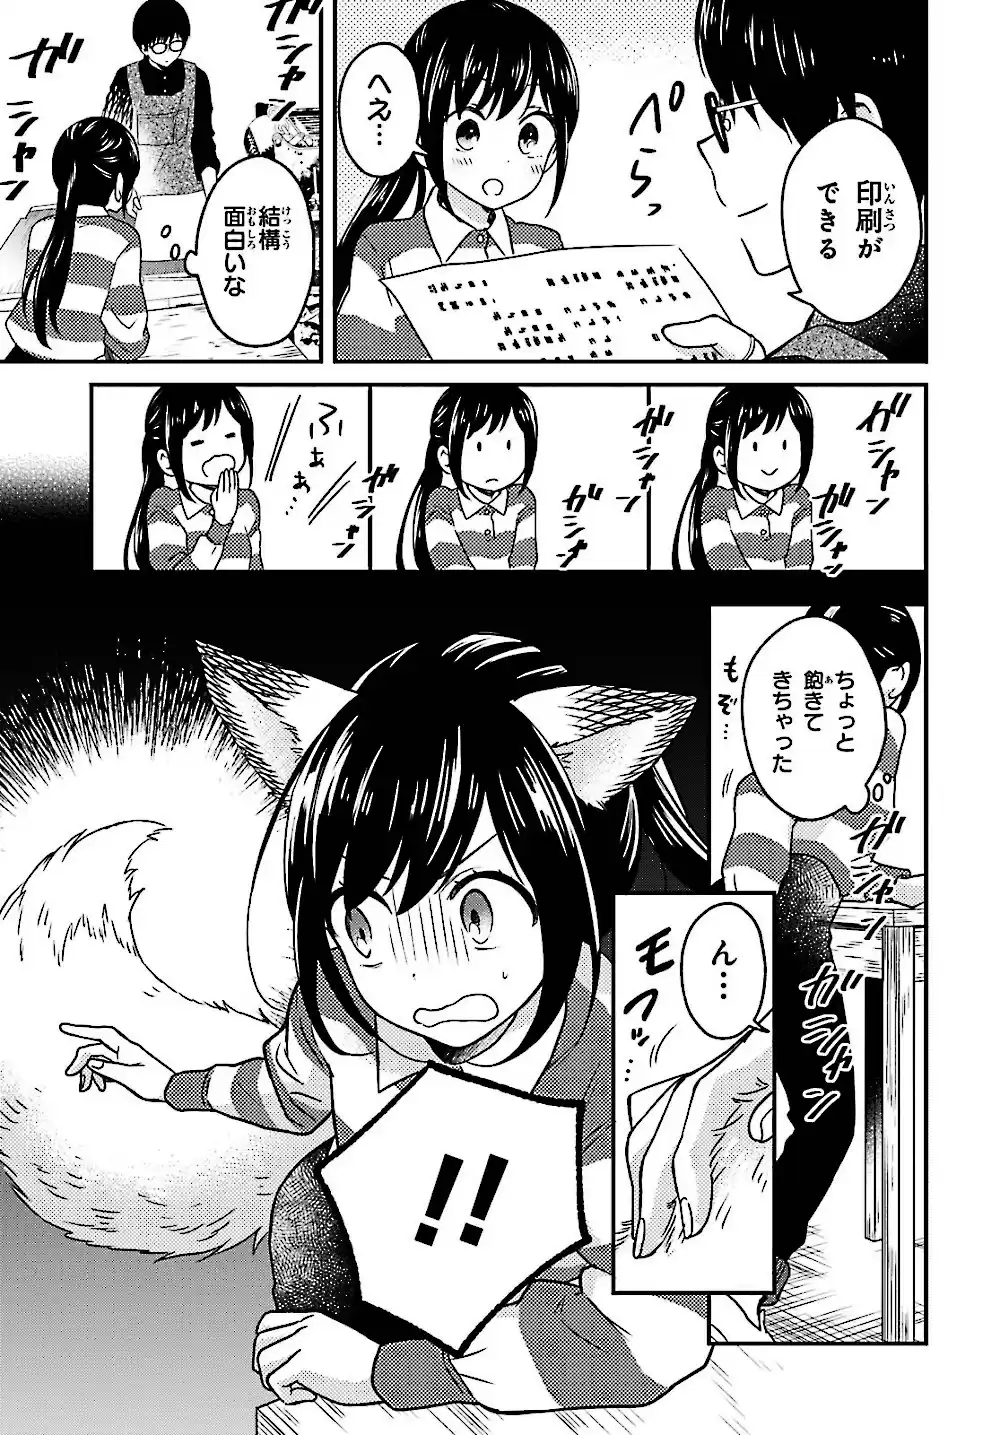 10 Manga E6is